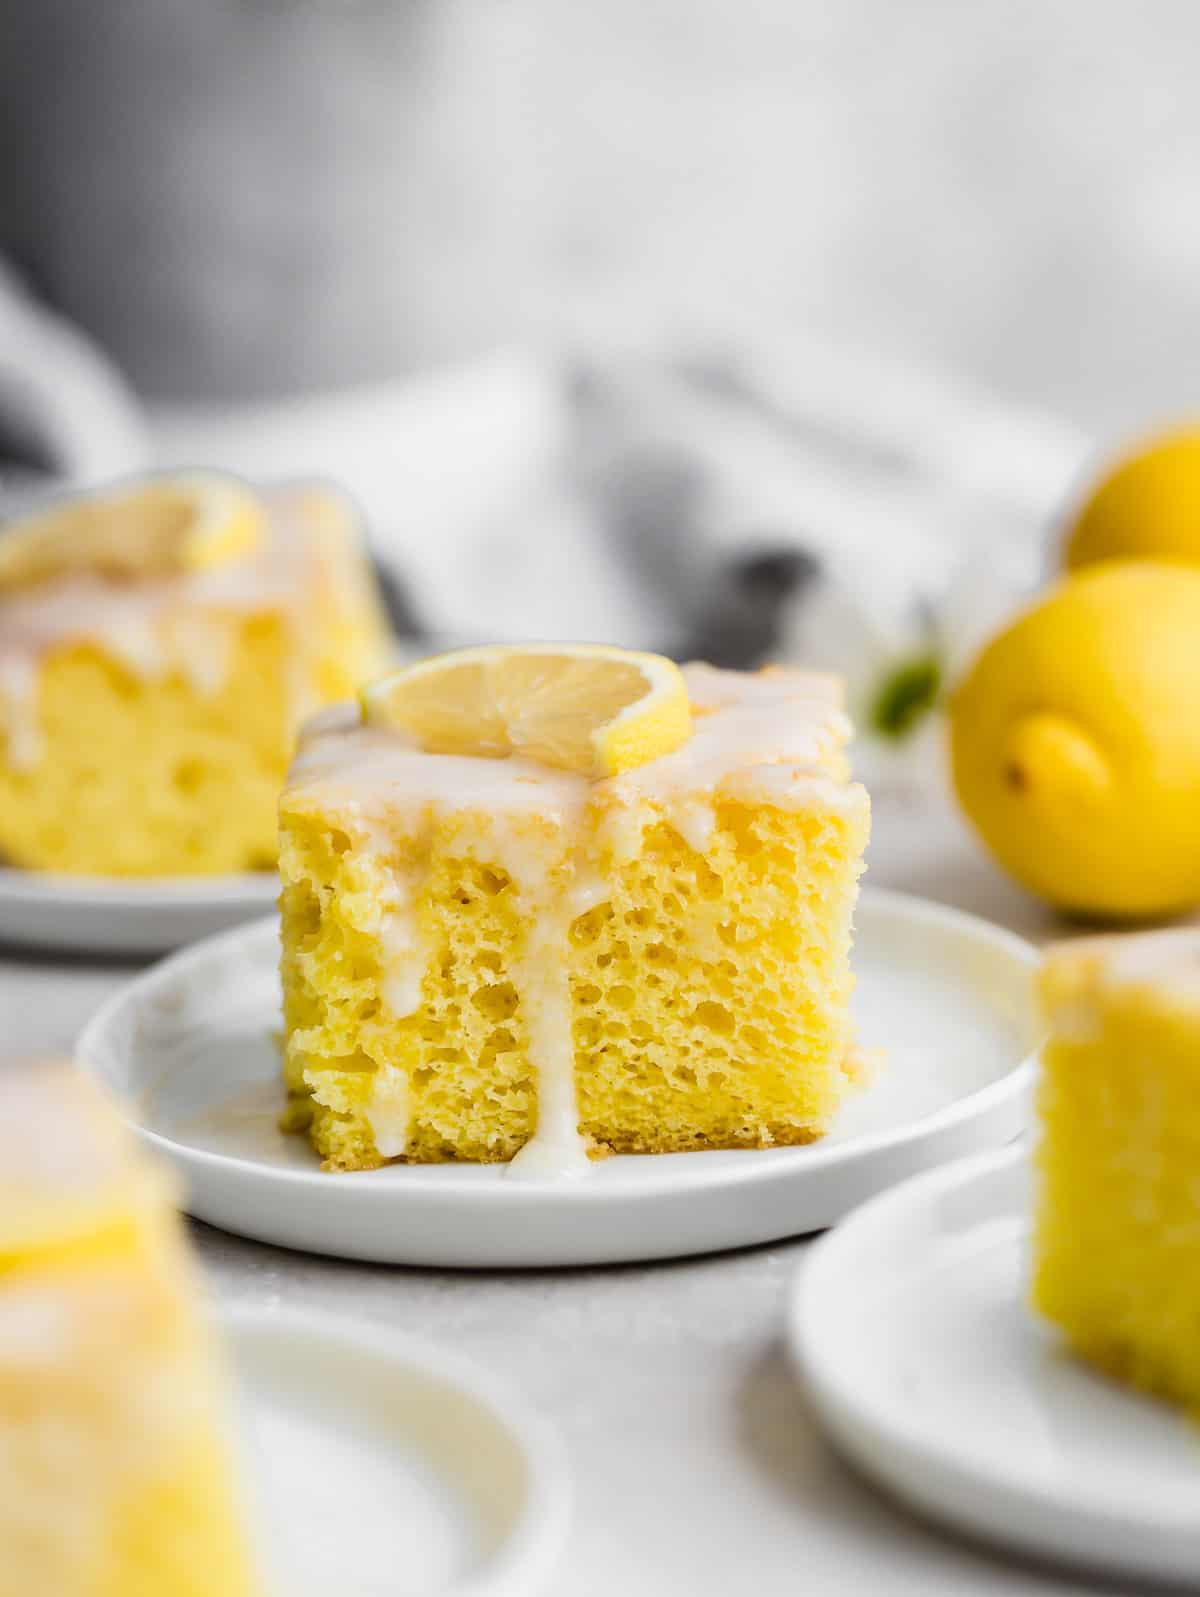 A slice of Lemon Jello Cake topped with a white glaze and a fresh lemon wedge.